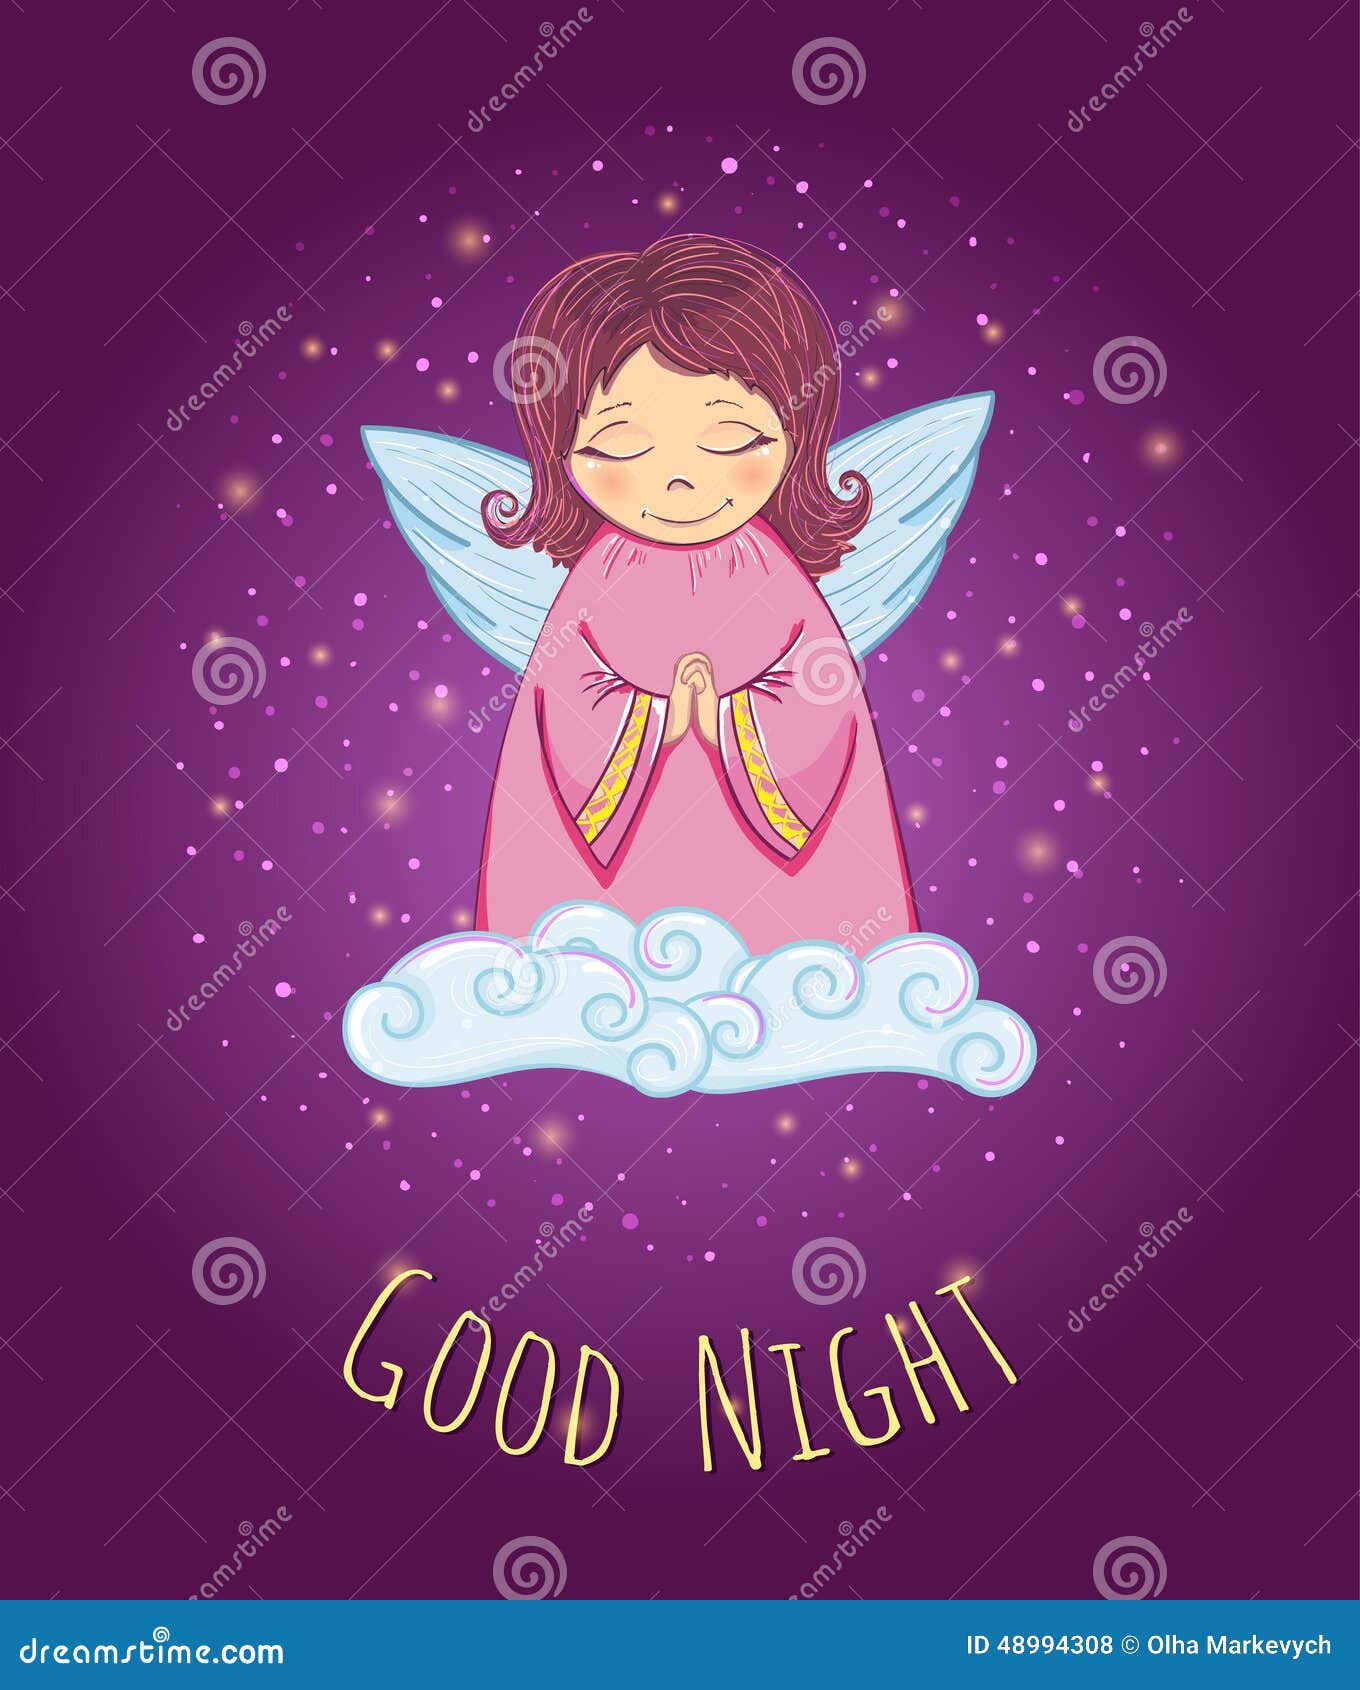 Good Night Angel stock vector. Illustration of fairy - 48994308